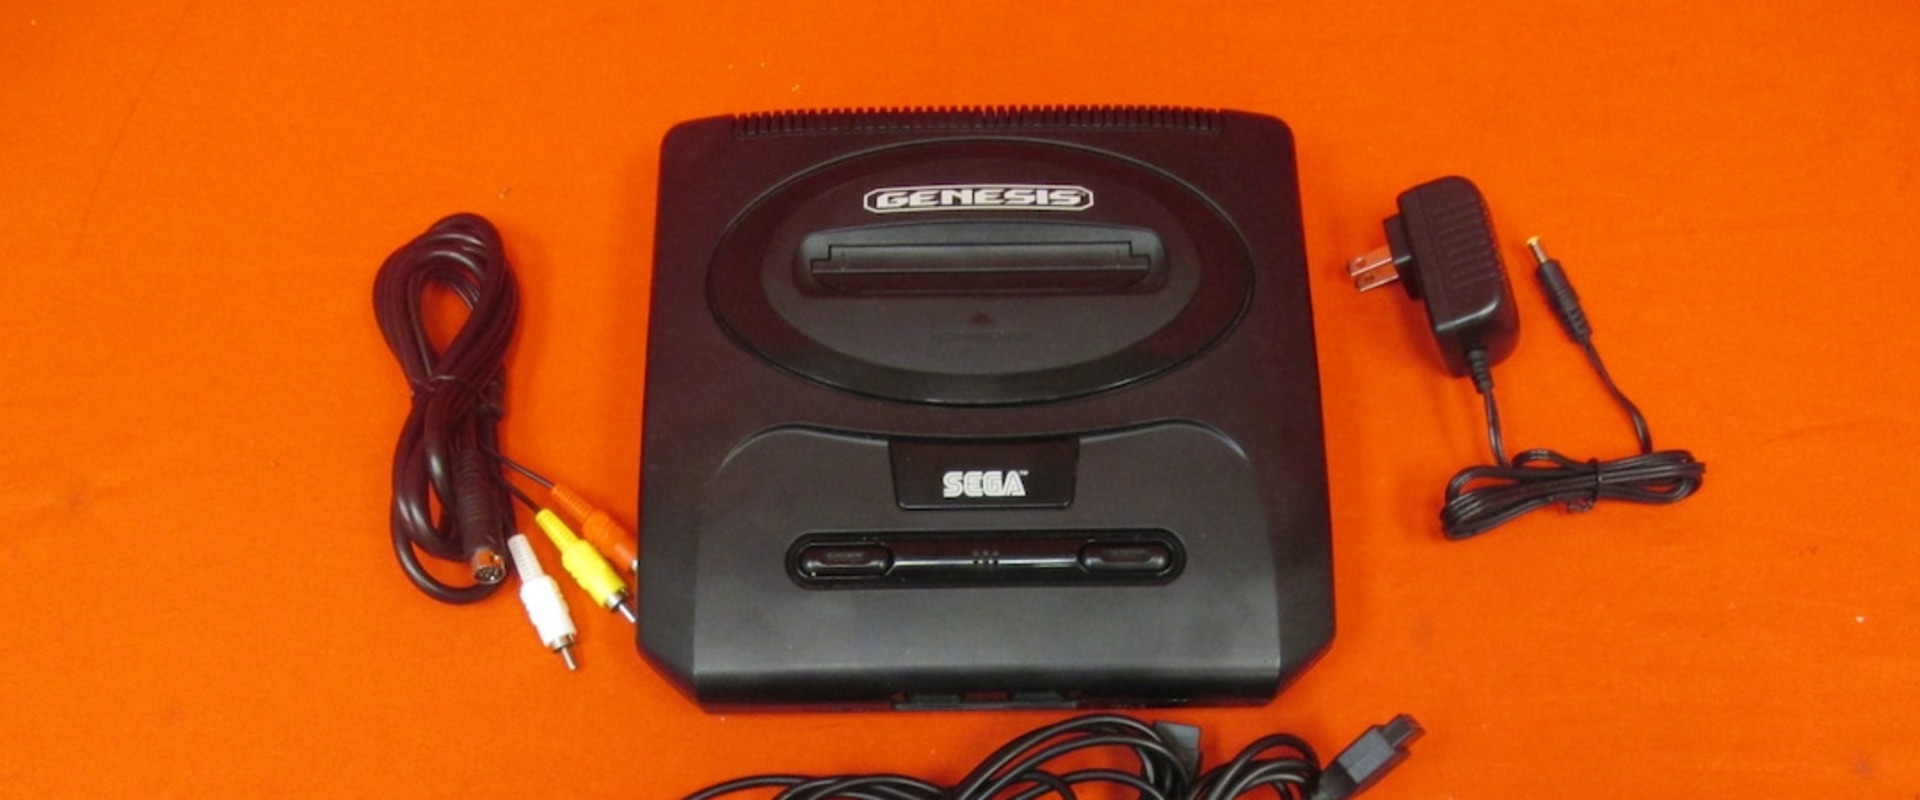 Understanding the Sega Genesis Console System